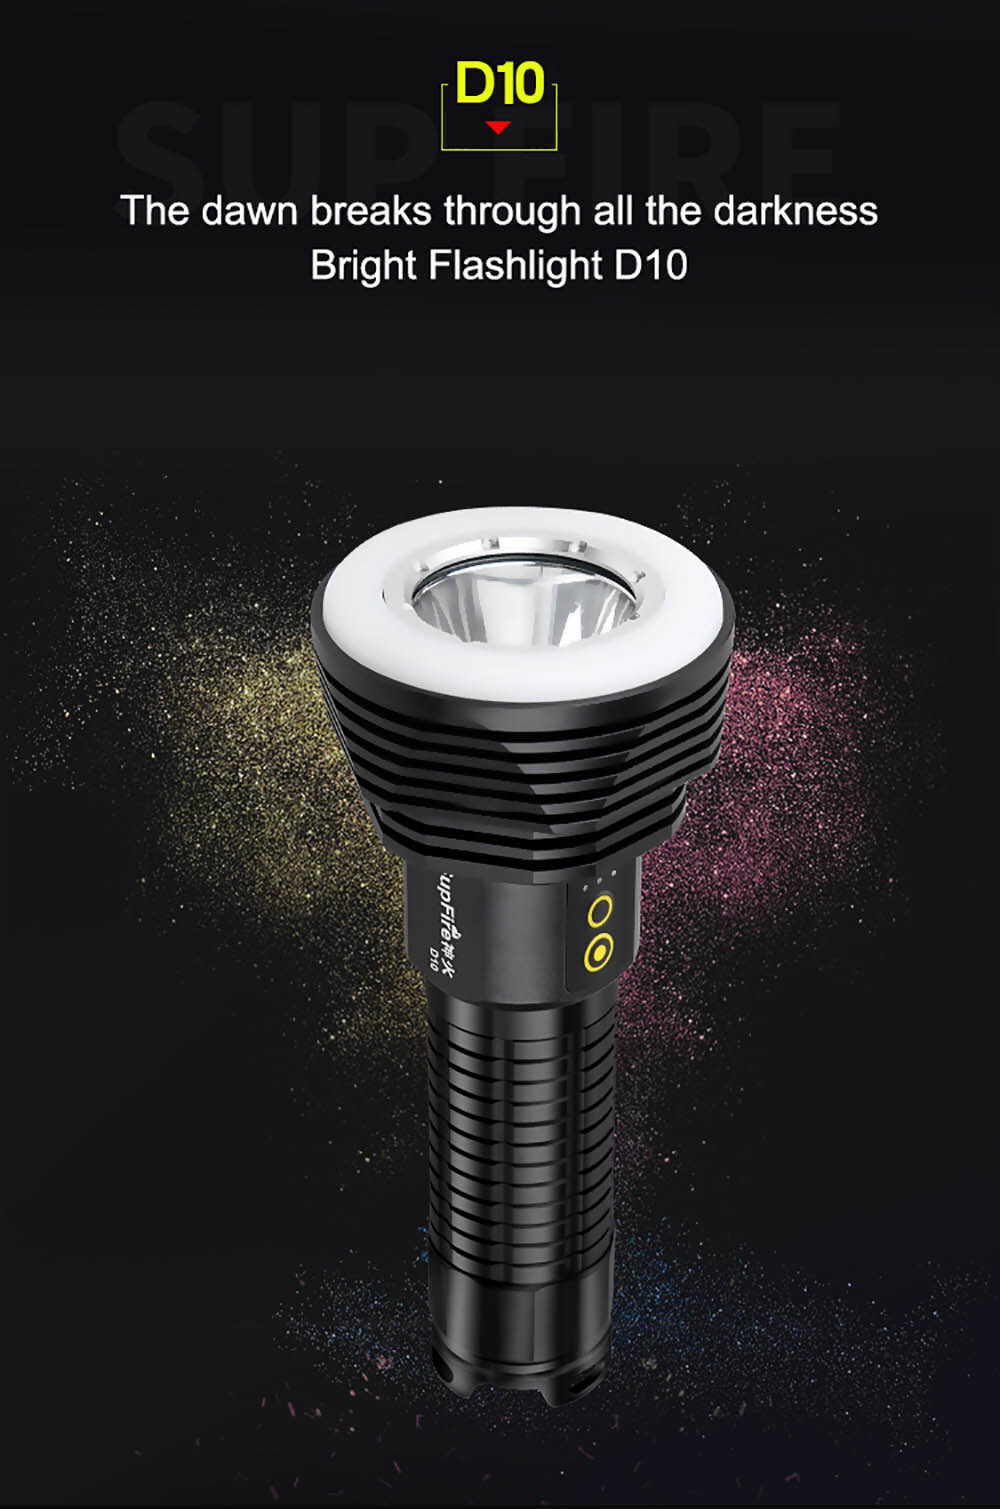 SupFire D10 search lights Rechargeable light